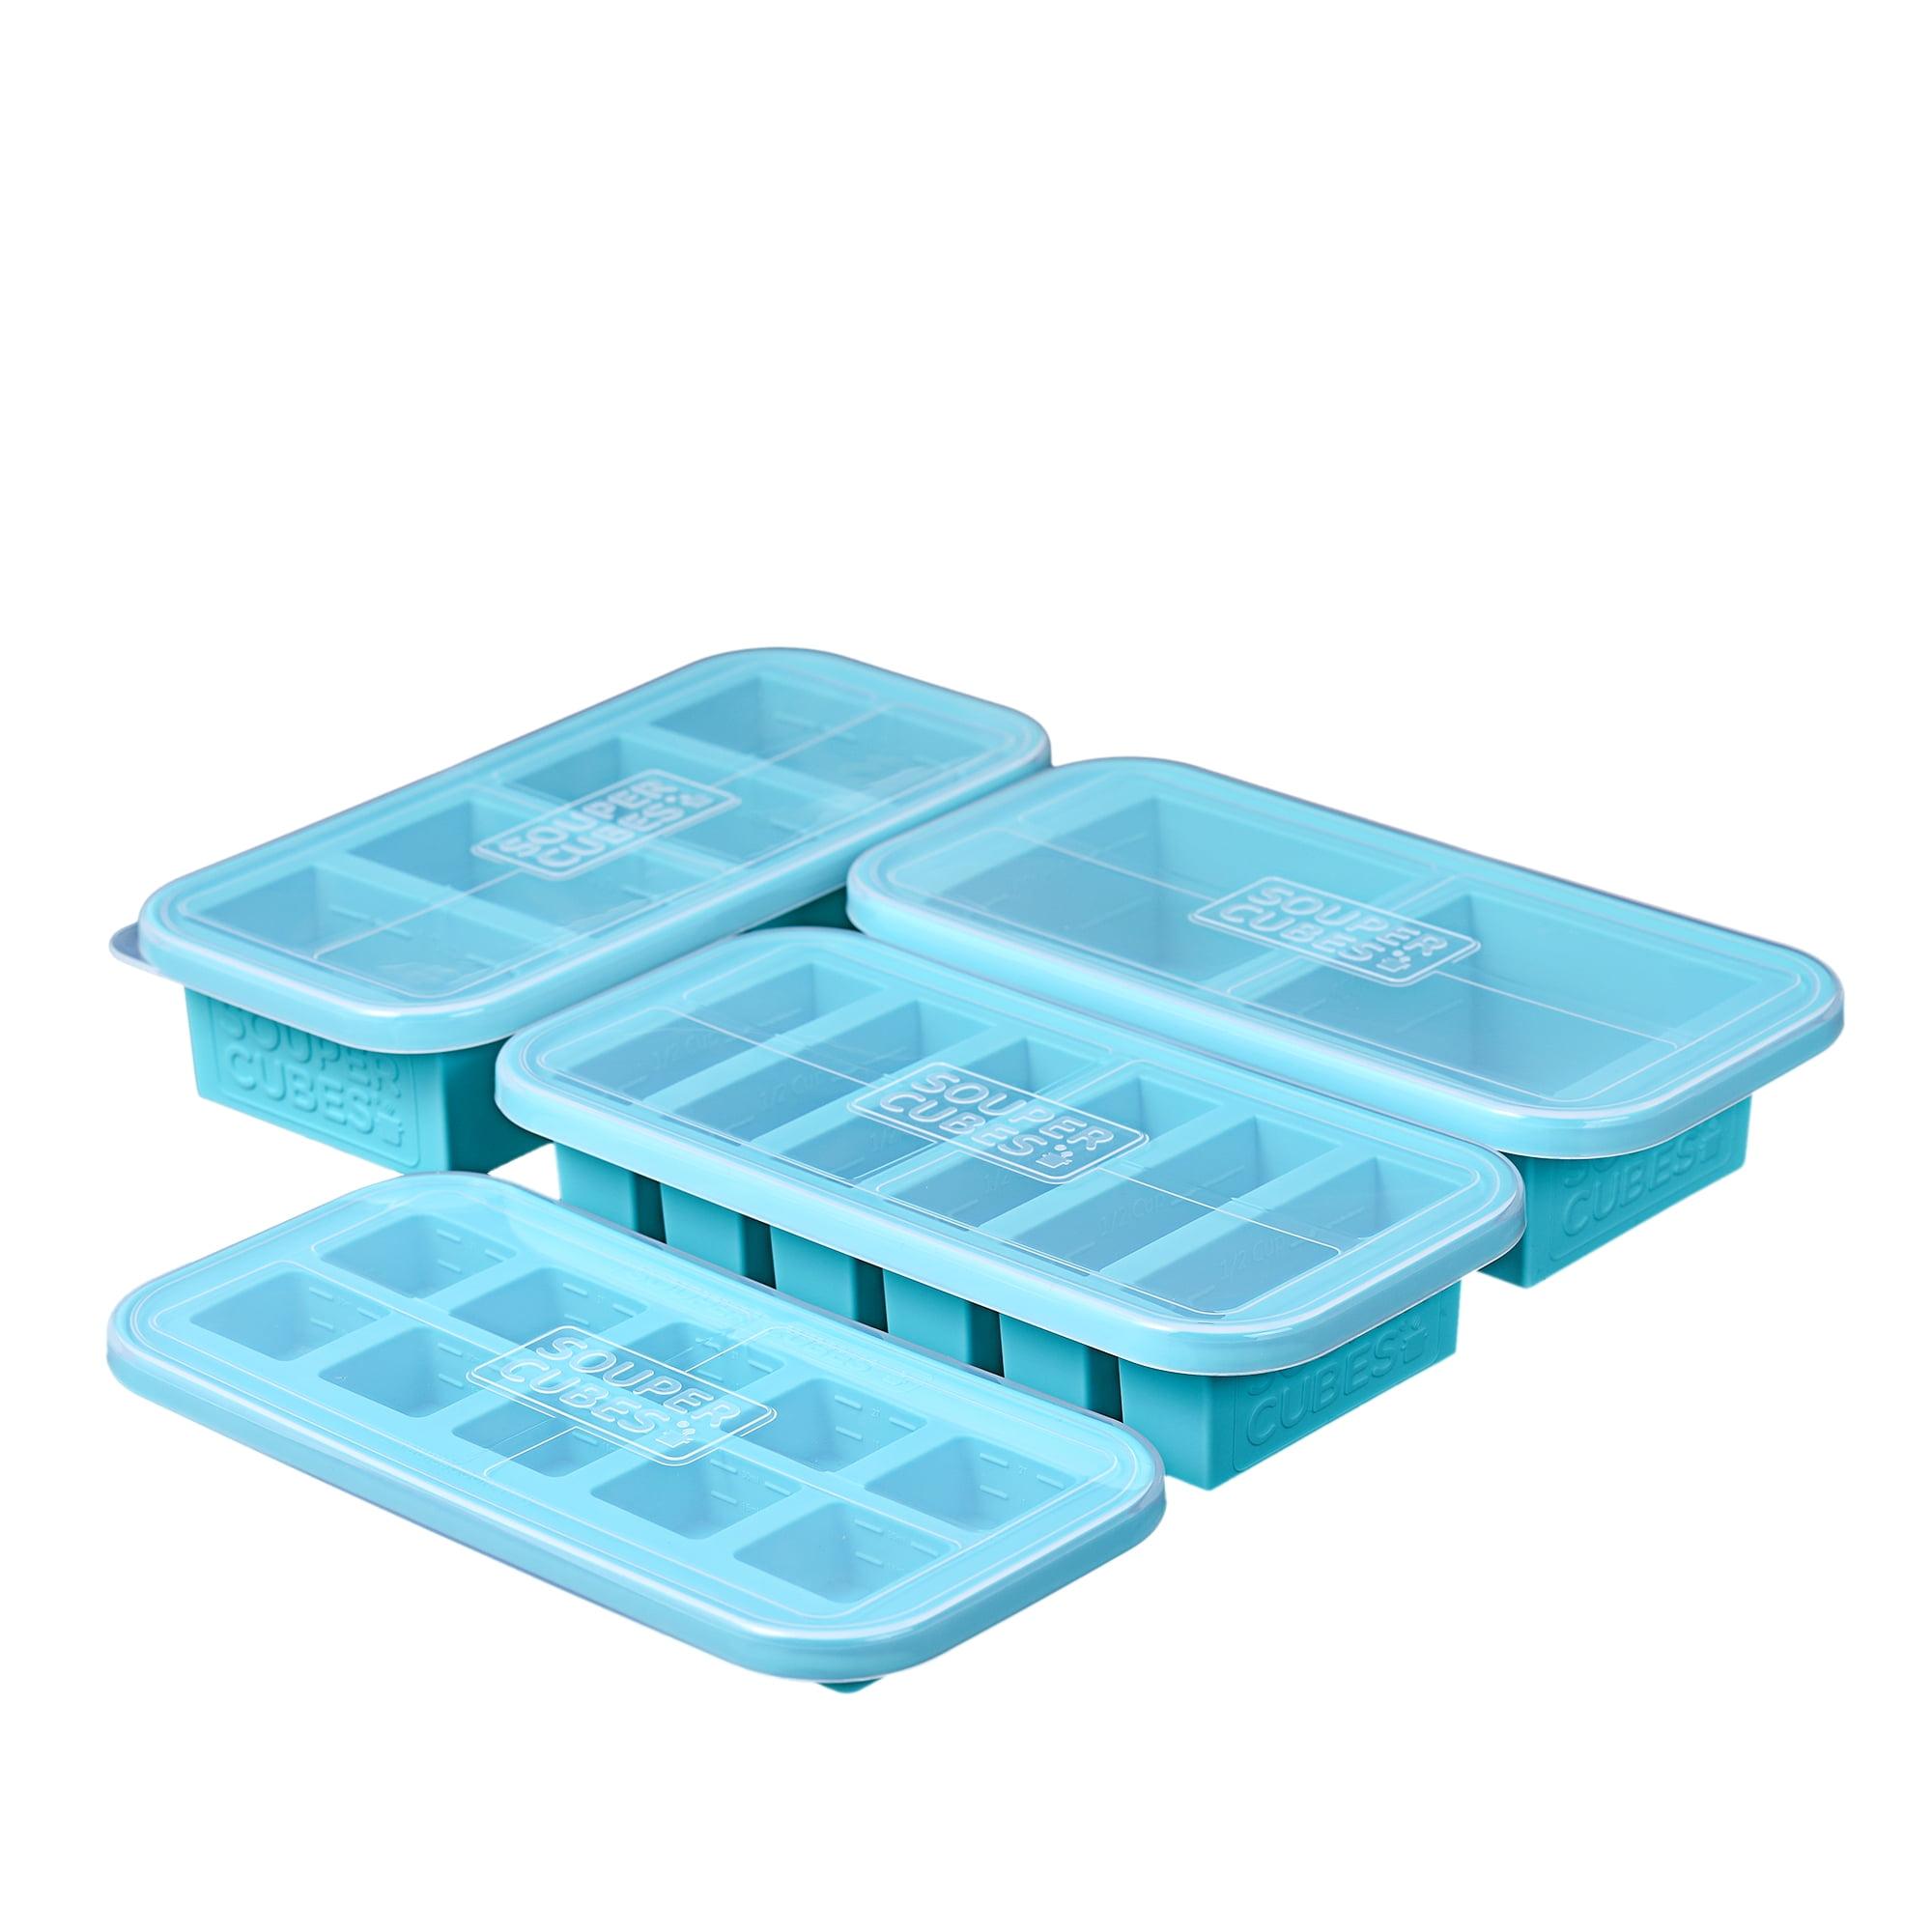 Aqua Silicone Freezer Trays with Lids, Set of 4